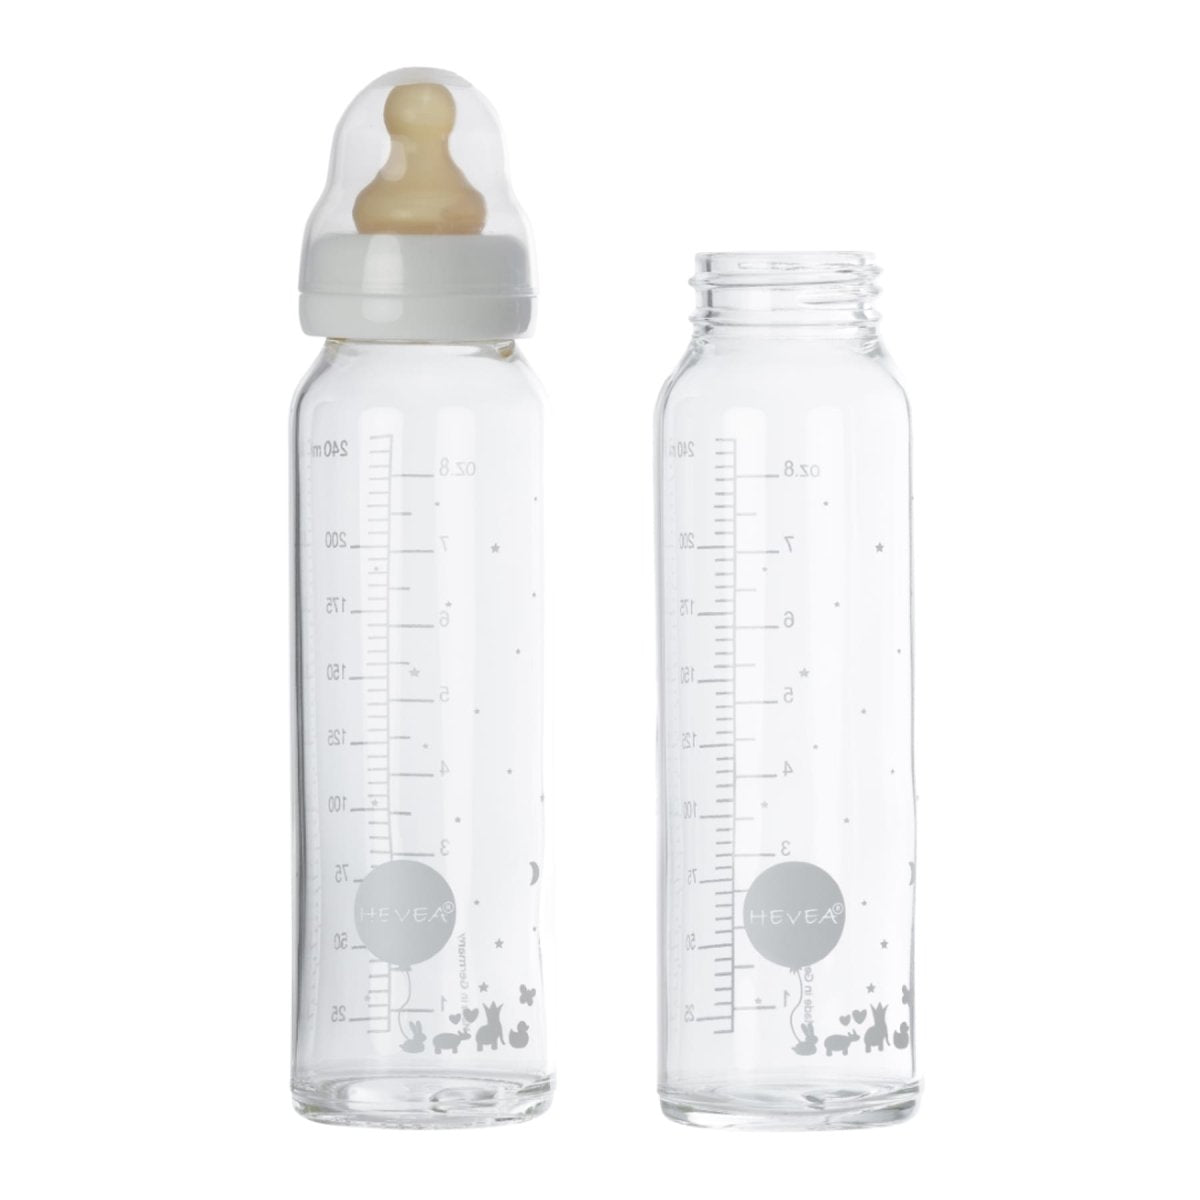 Glass Baby Bottle 8oz - 2 Pack | Hevea | Feeding - Bee Like Kids